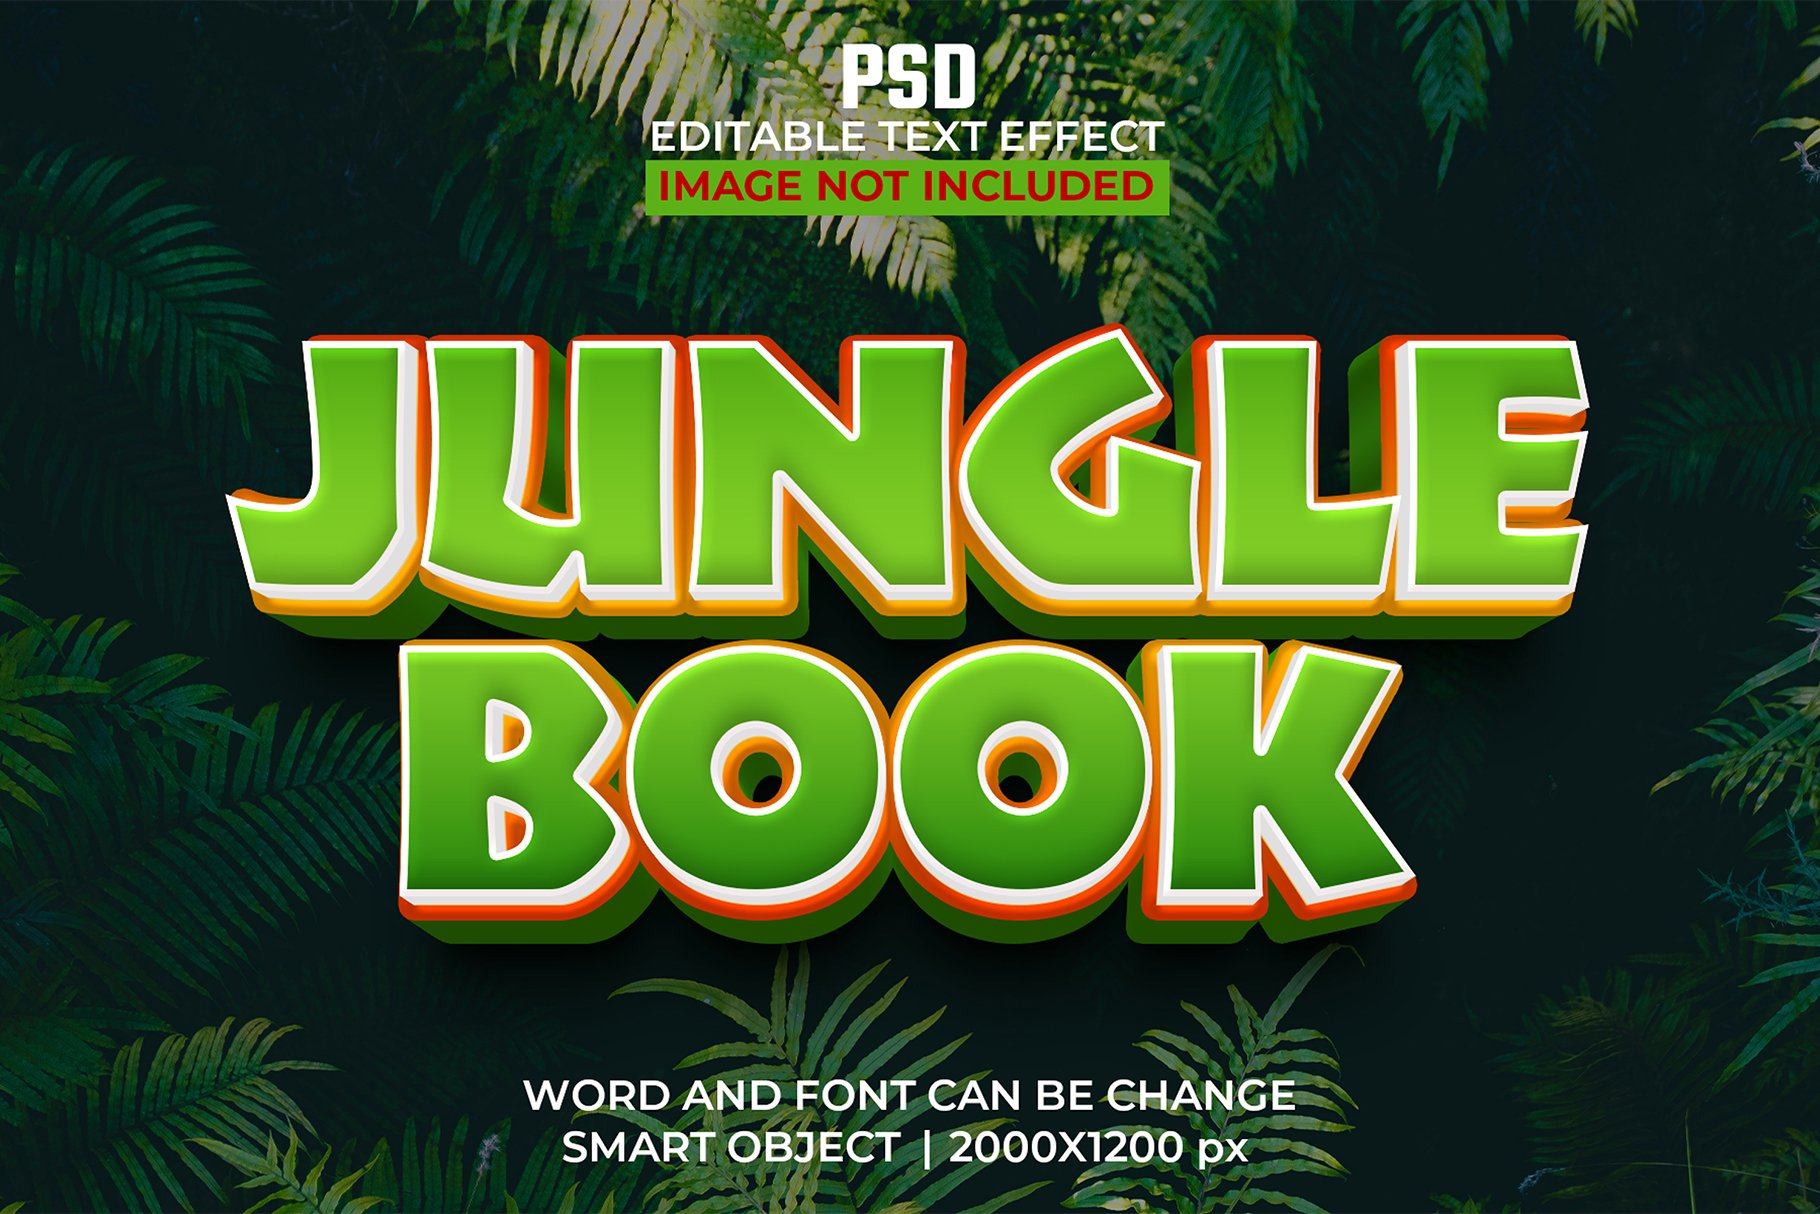 Jungle book 3d Psd Text Effectcover image.